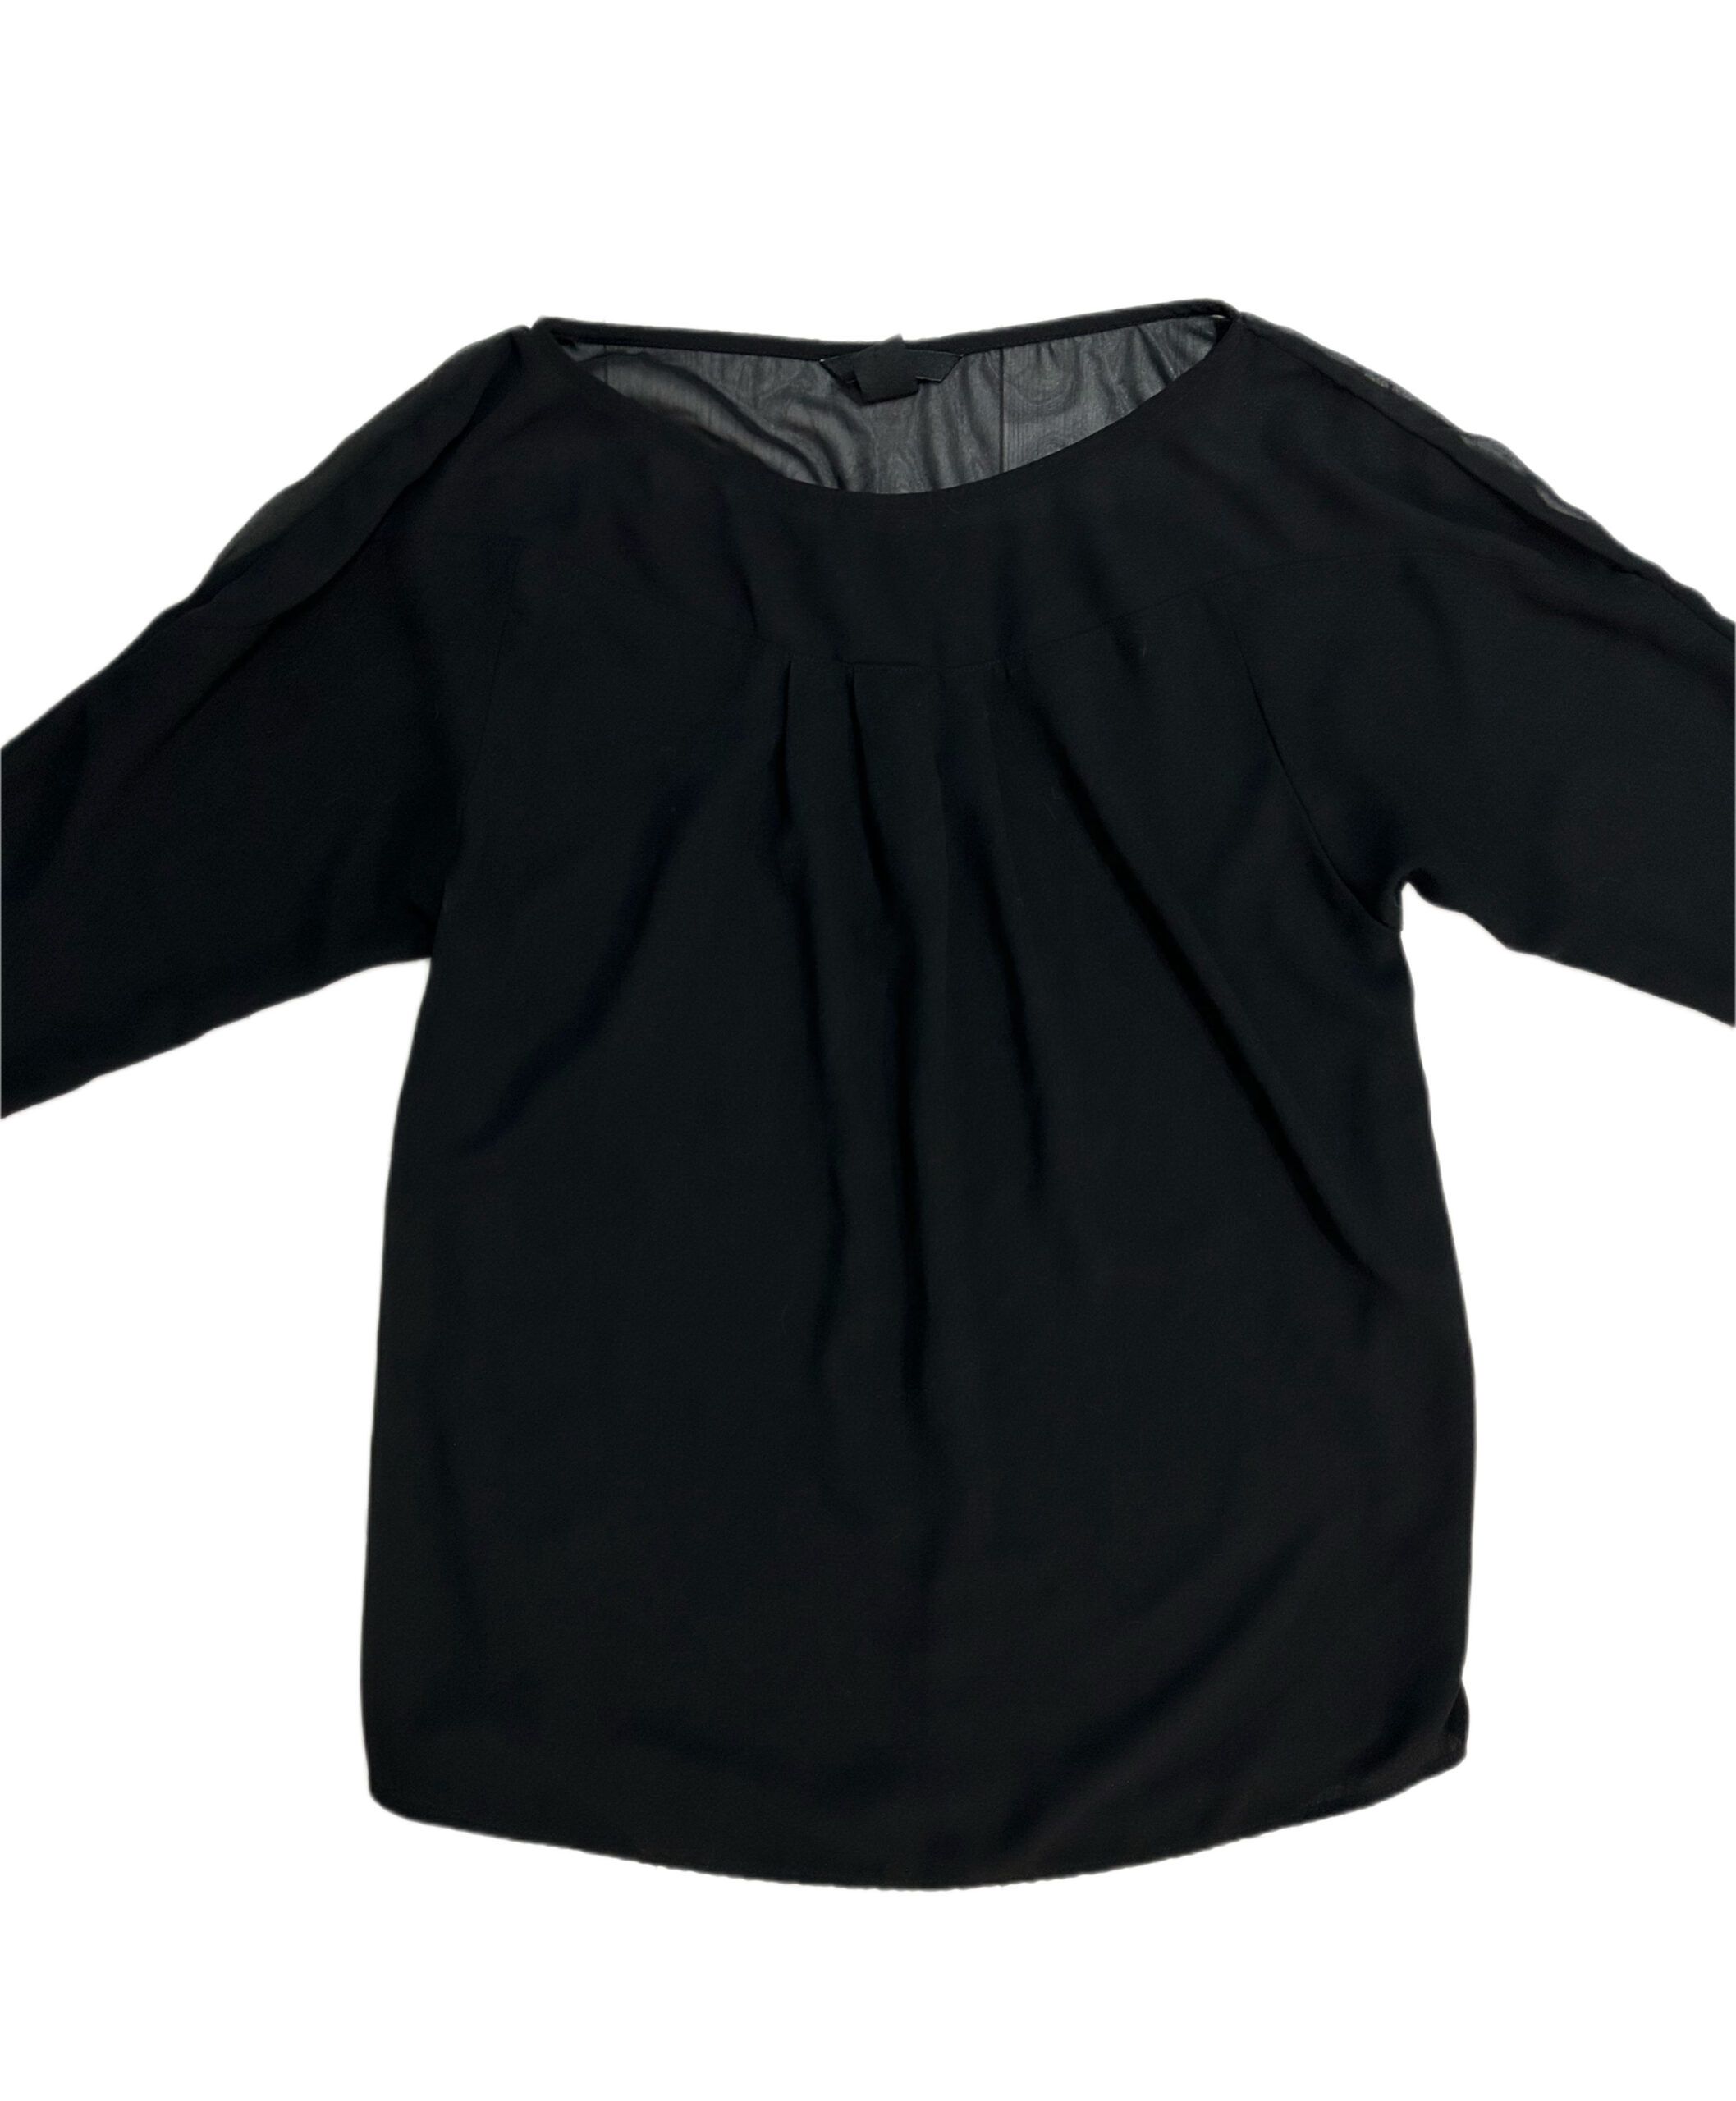 Elegancka czarna bluzka H&M [Rozmiar: S]